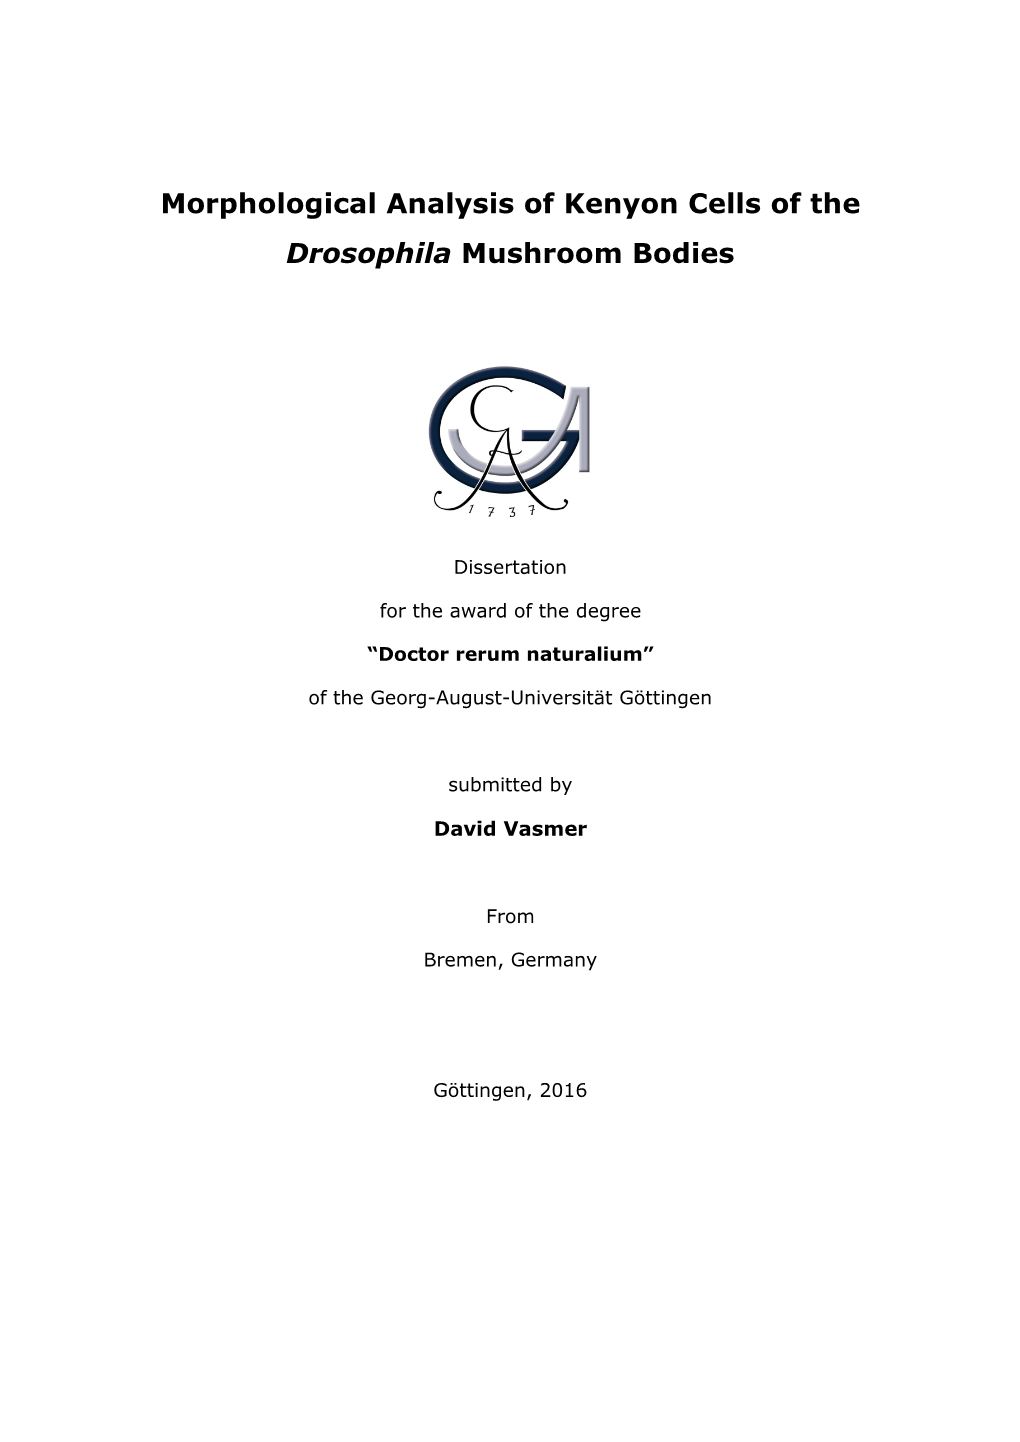 Morphological Analysis of Kenyon Cells of the Drosophila Mushroom Bodies